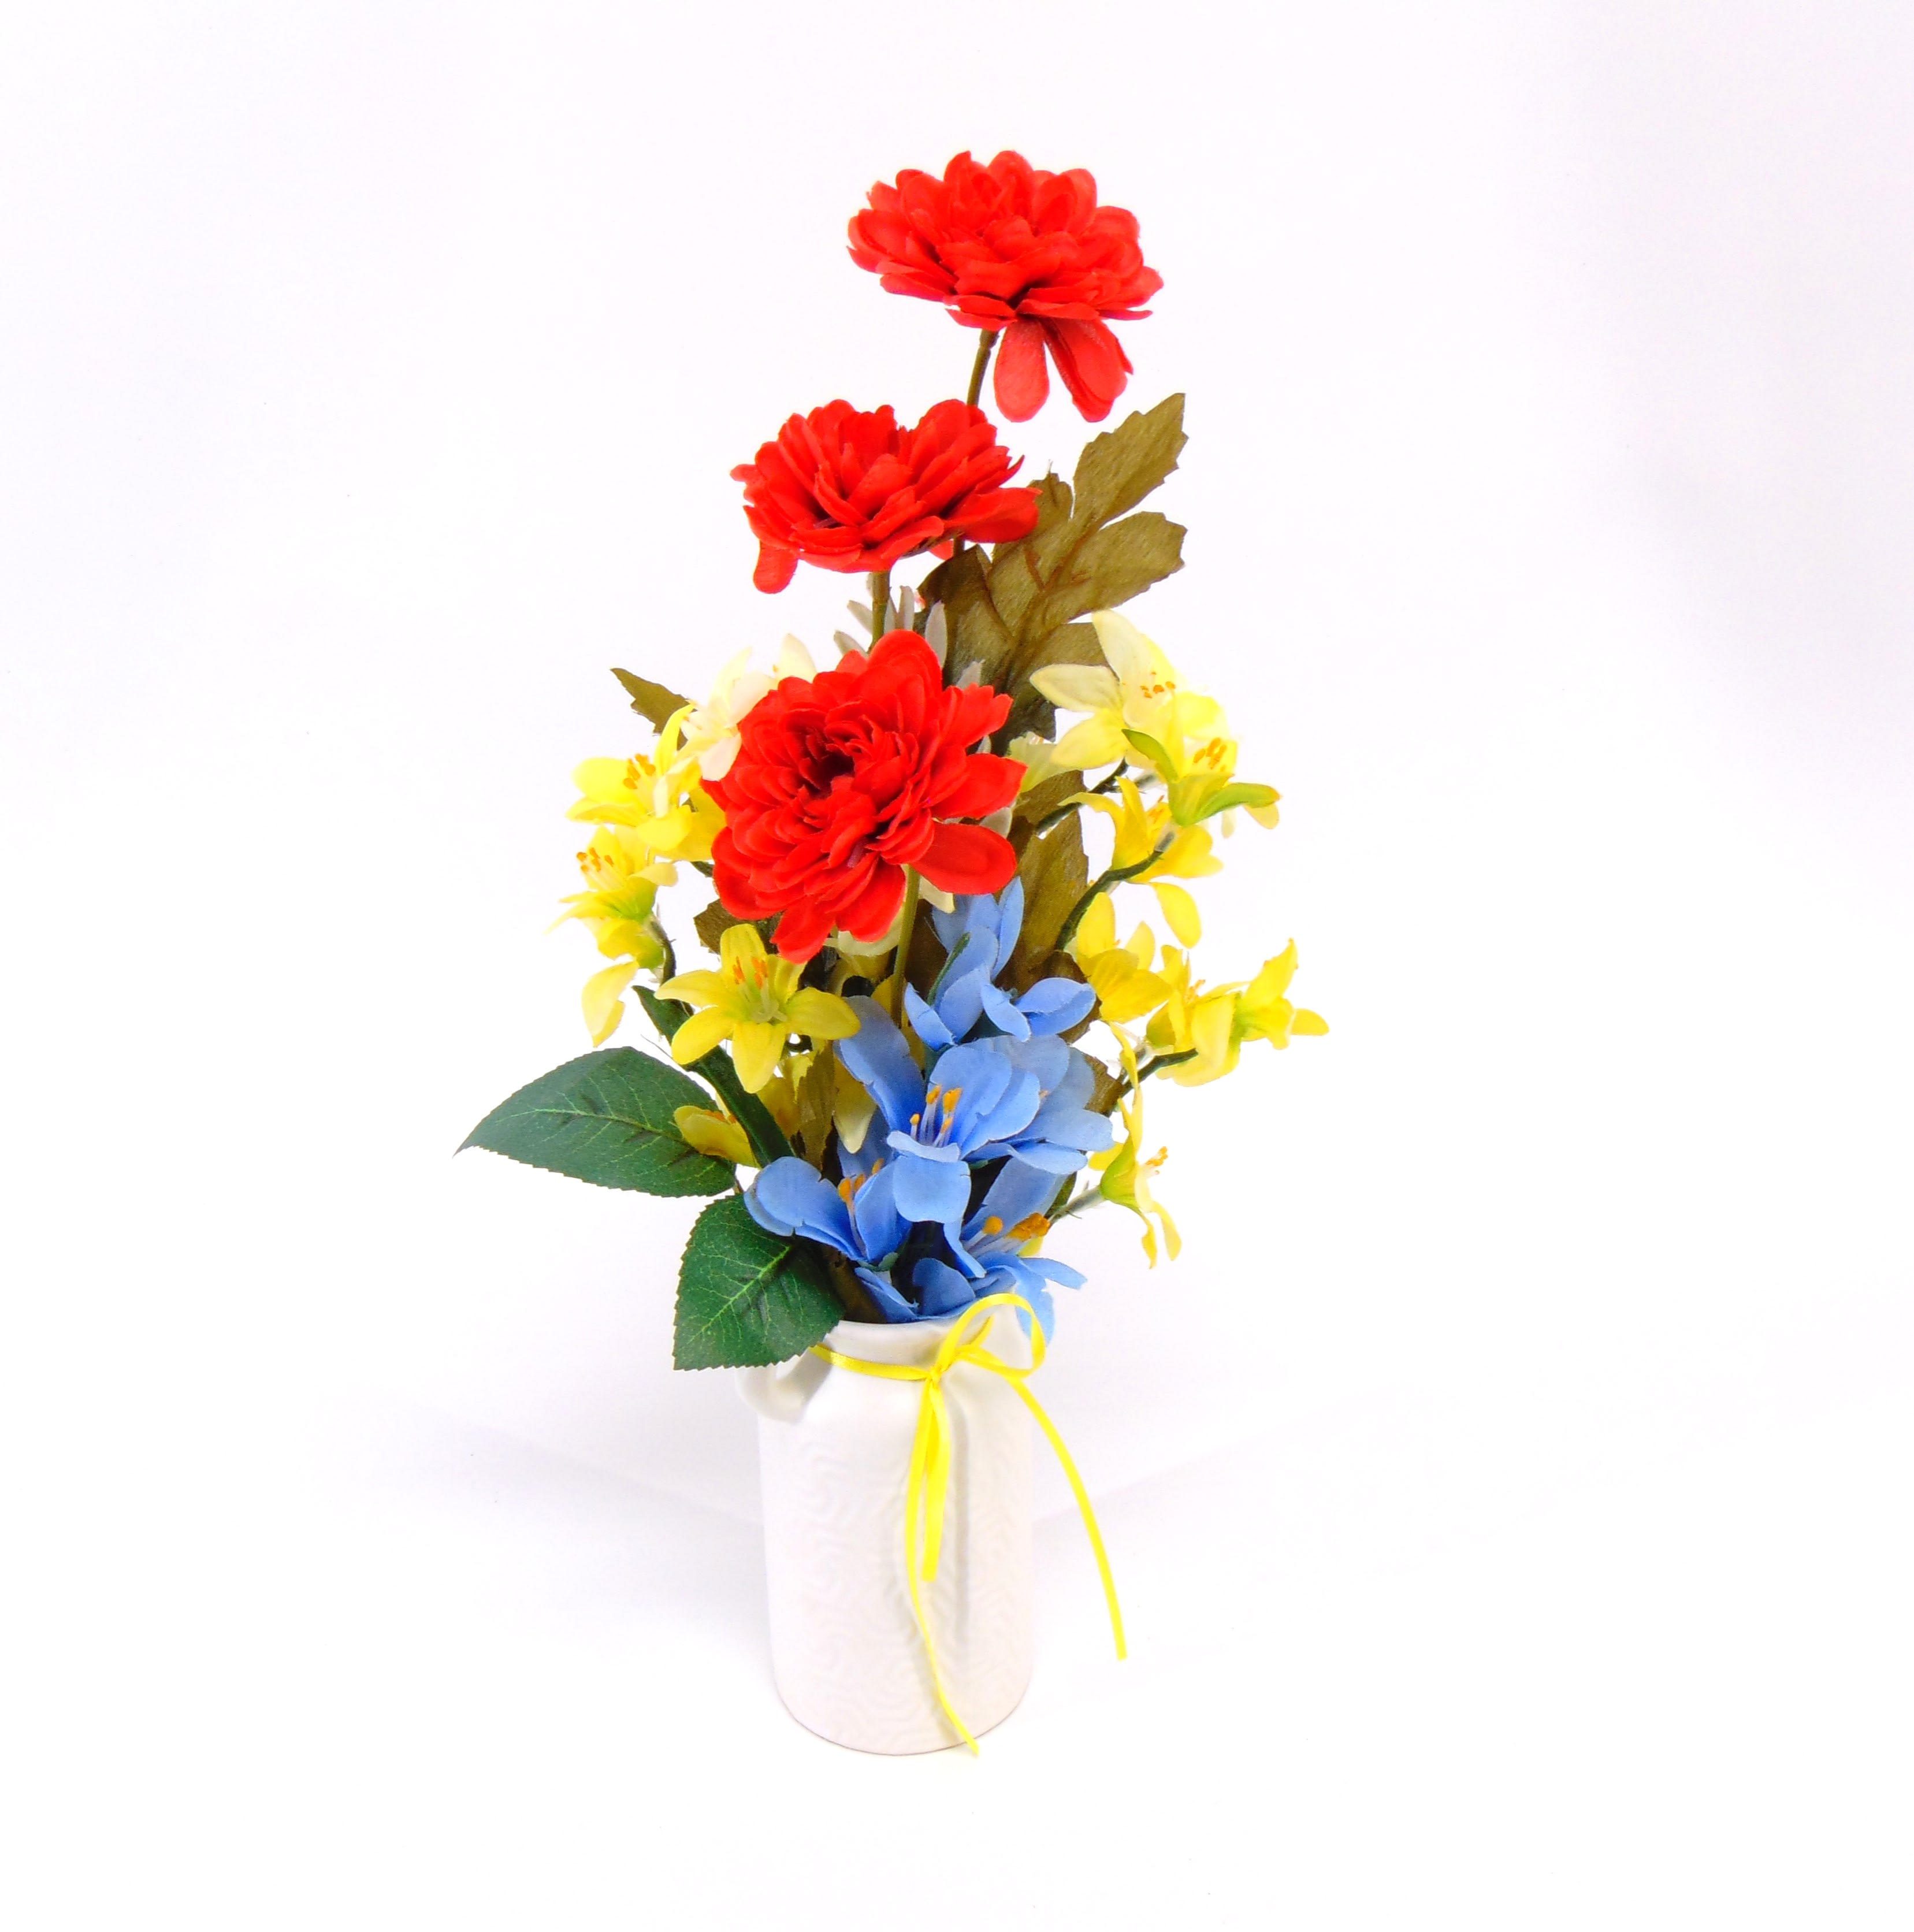 RYB Mini Silk in Ceramic Milkcan - Red, Yellow and Blue silk flowers in a minature milkcan.